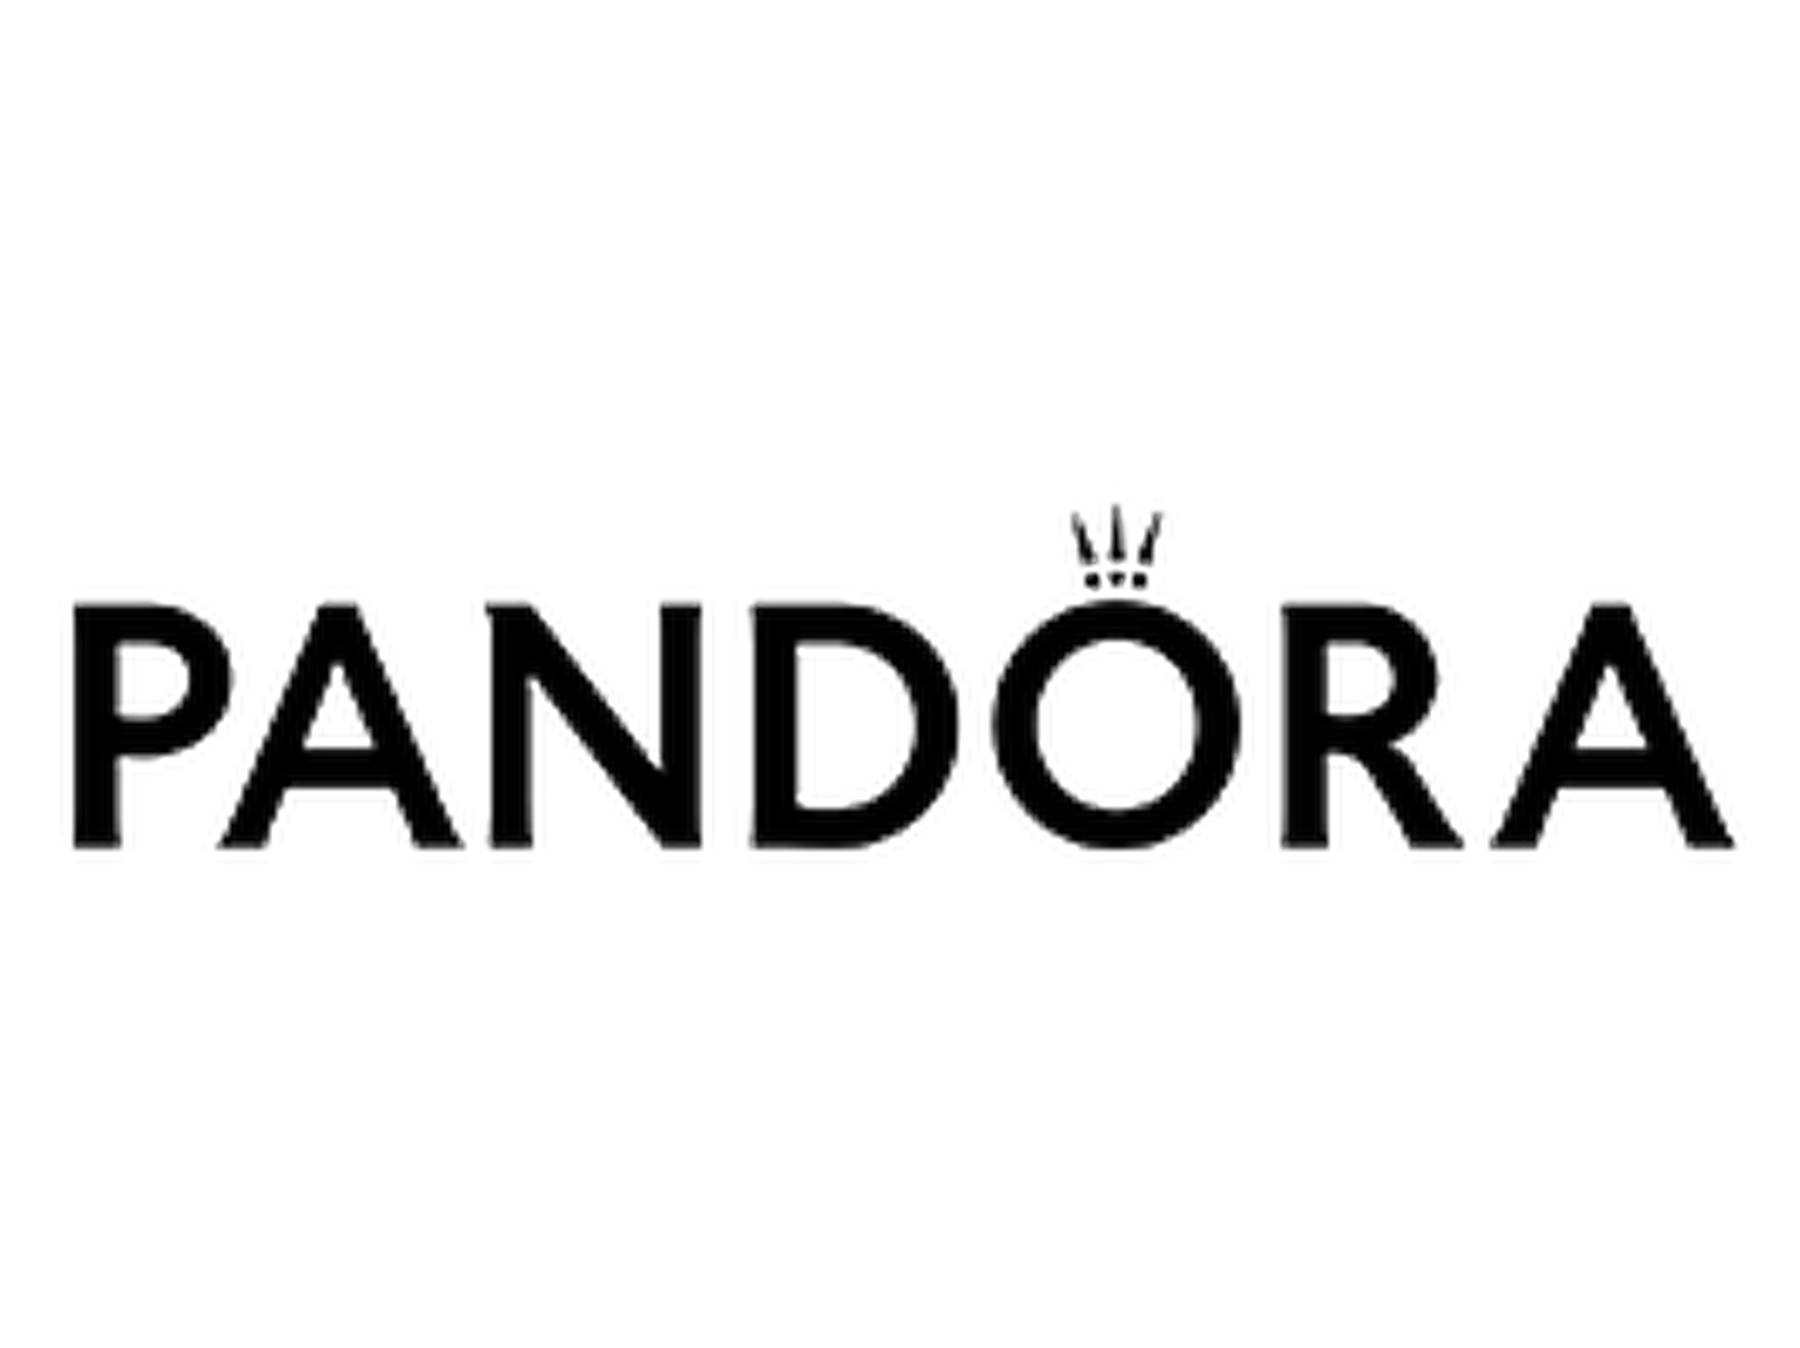 Cupom Pandora